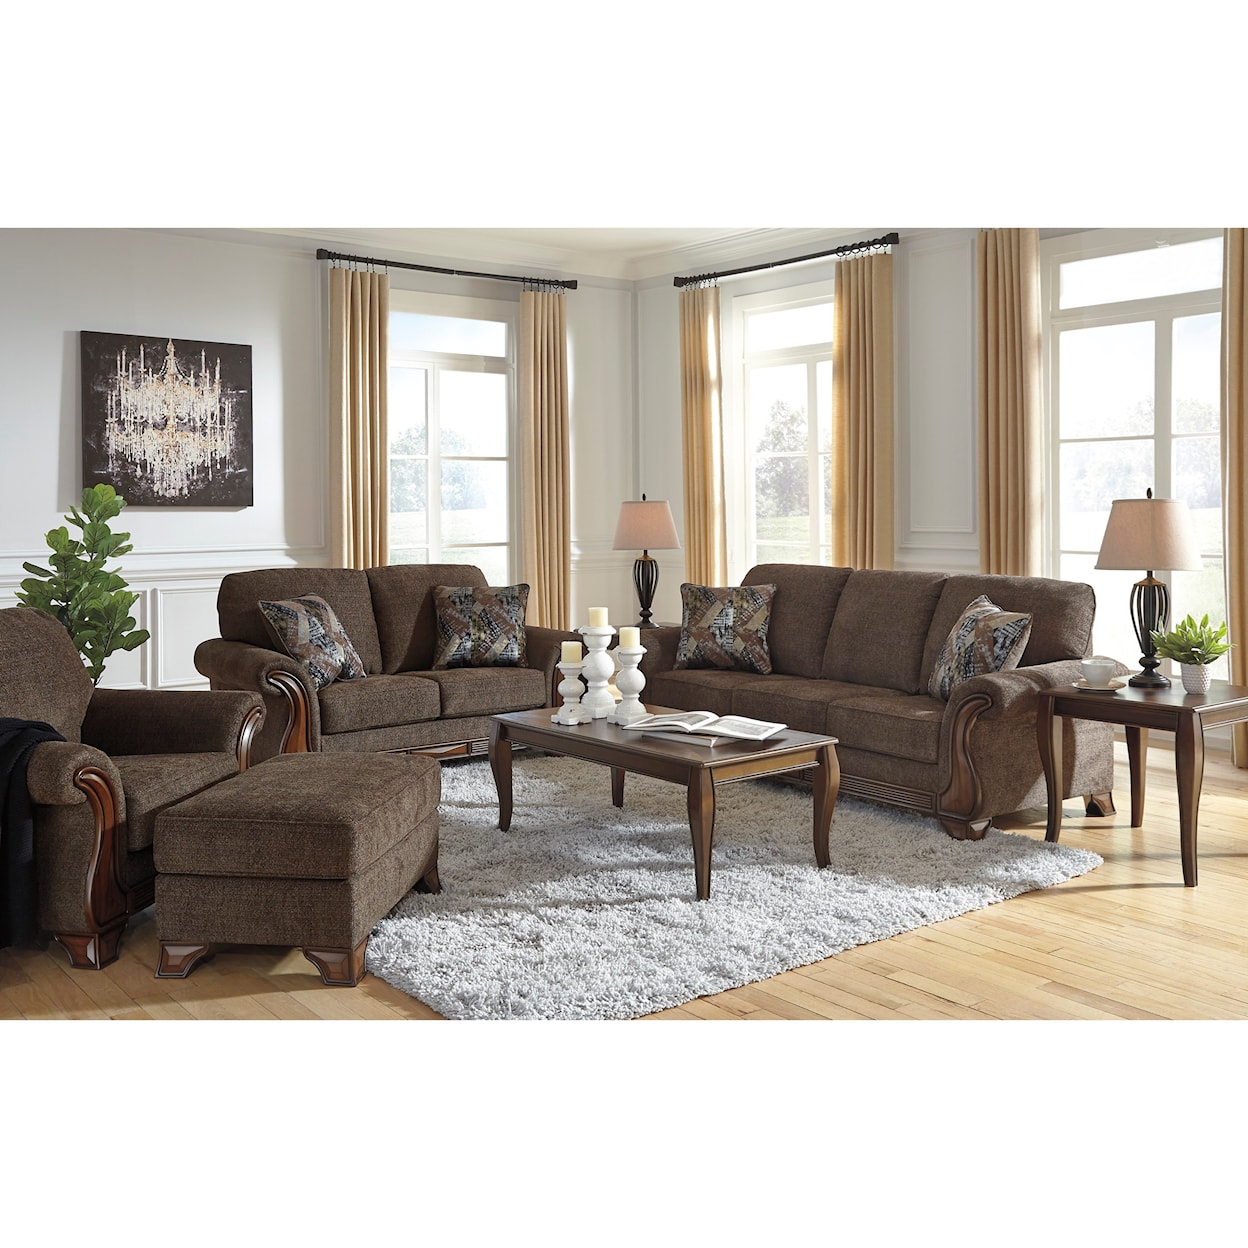 Ashley Furniture Benchcraft Miltonwood Living Room Group